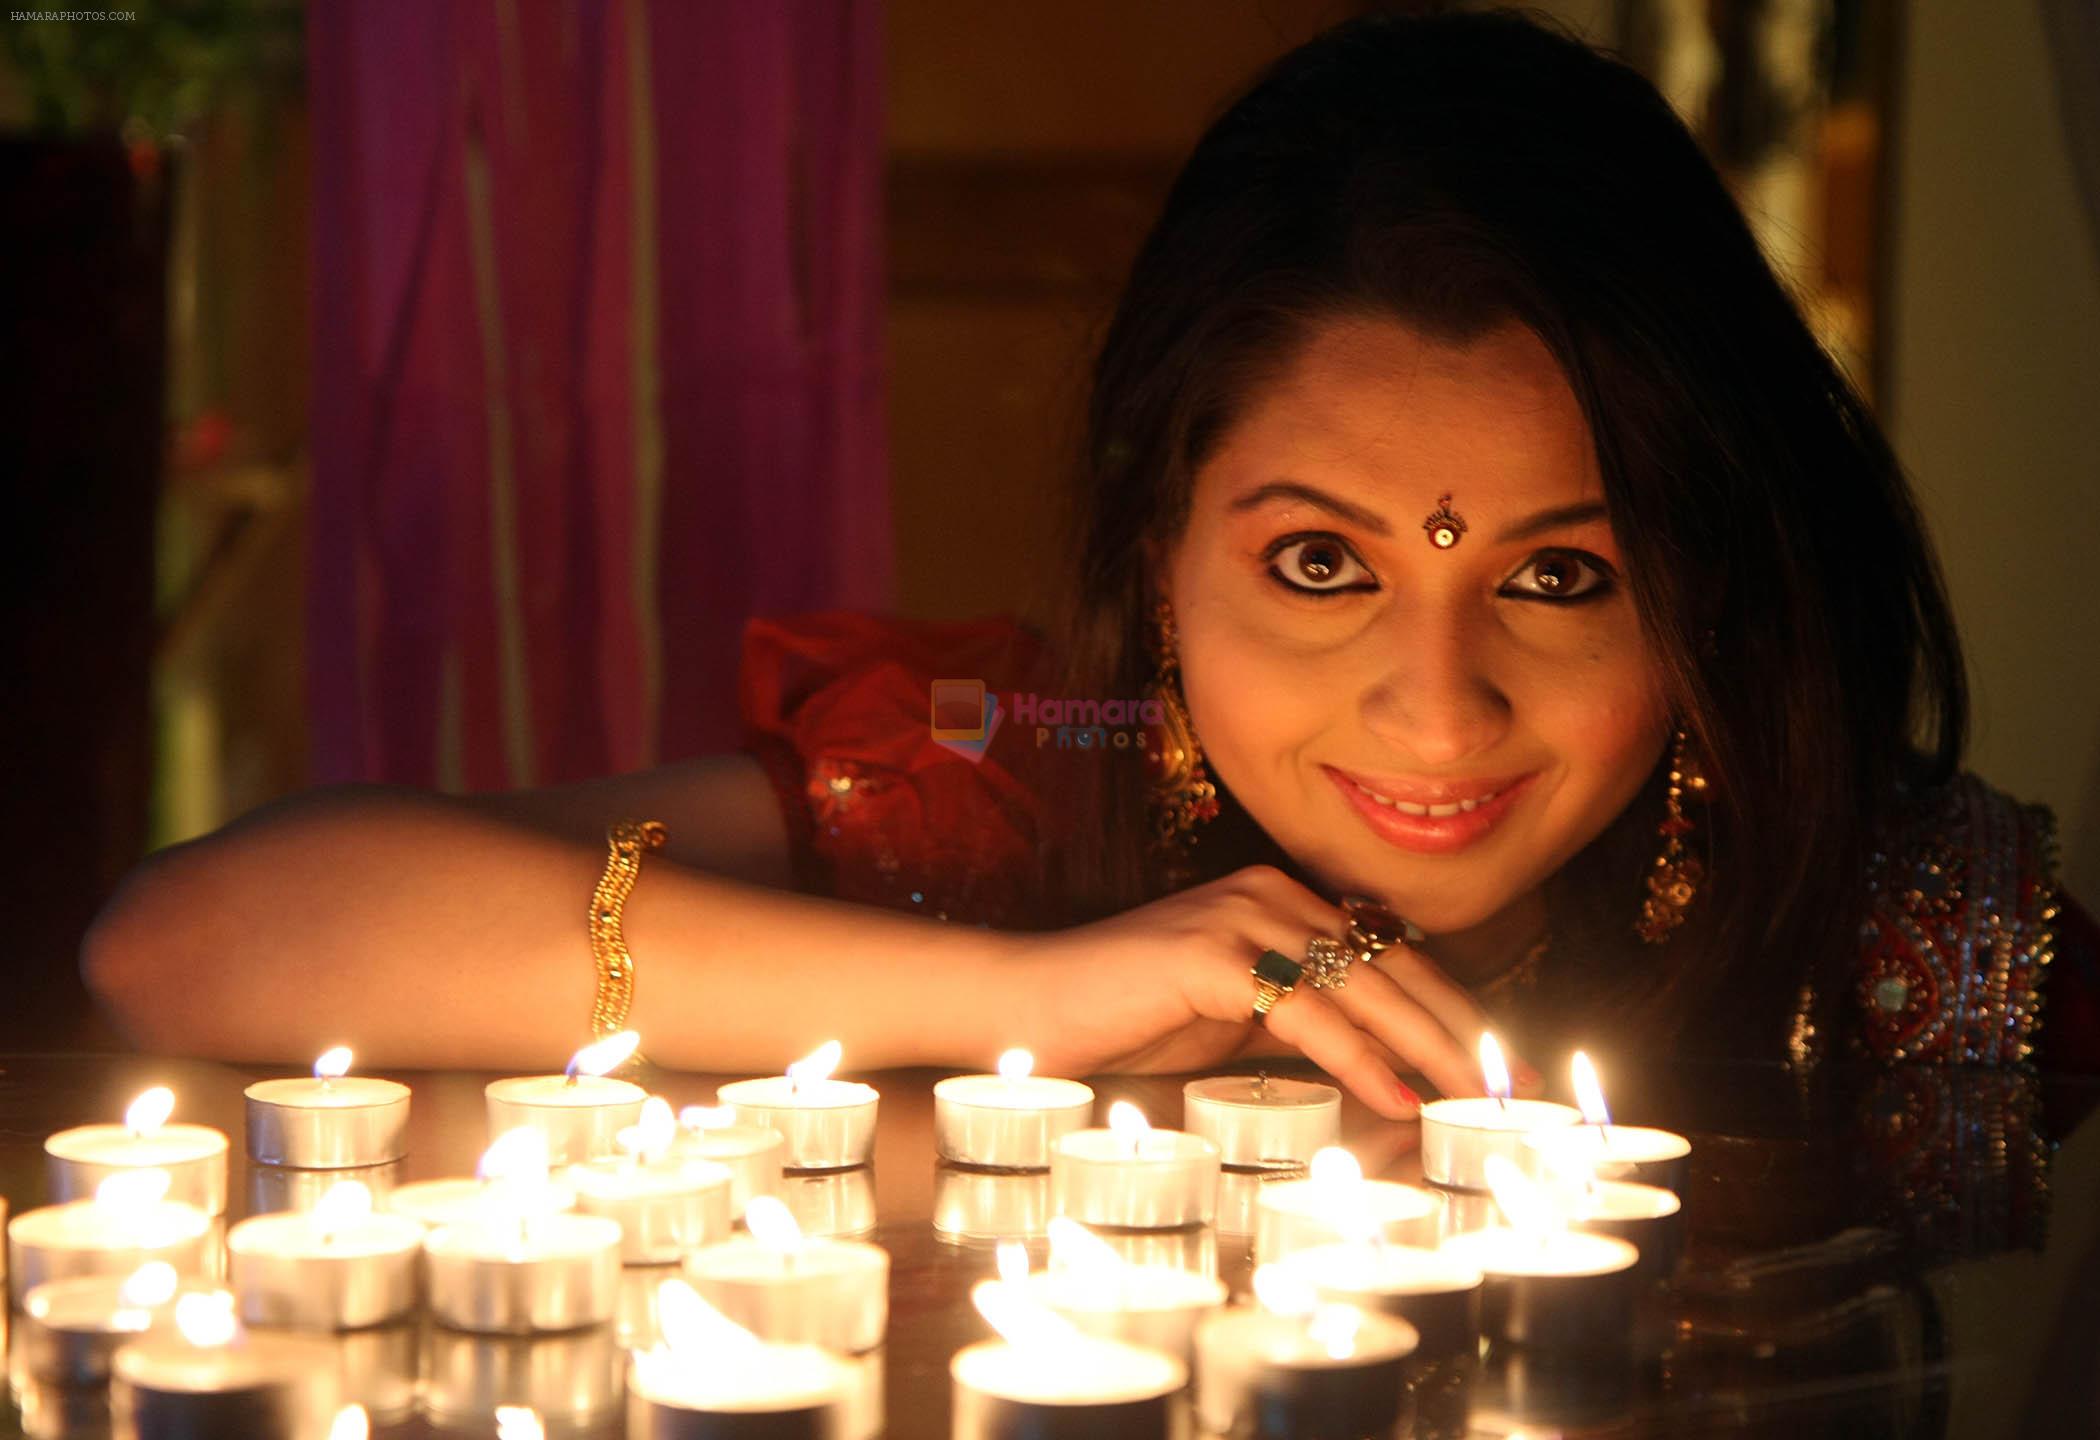 Misti Mukherjee Celebrating Deepawali Hindu festivals of Lights